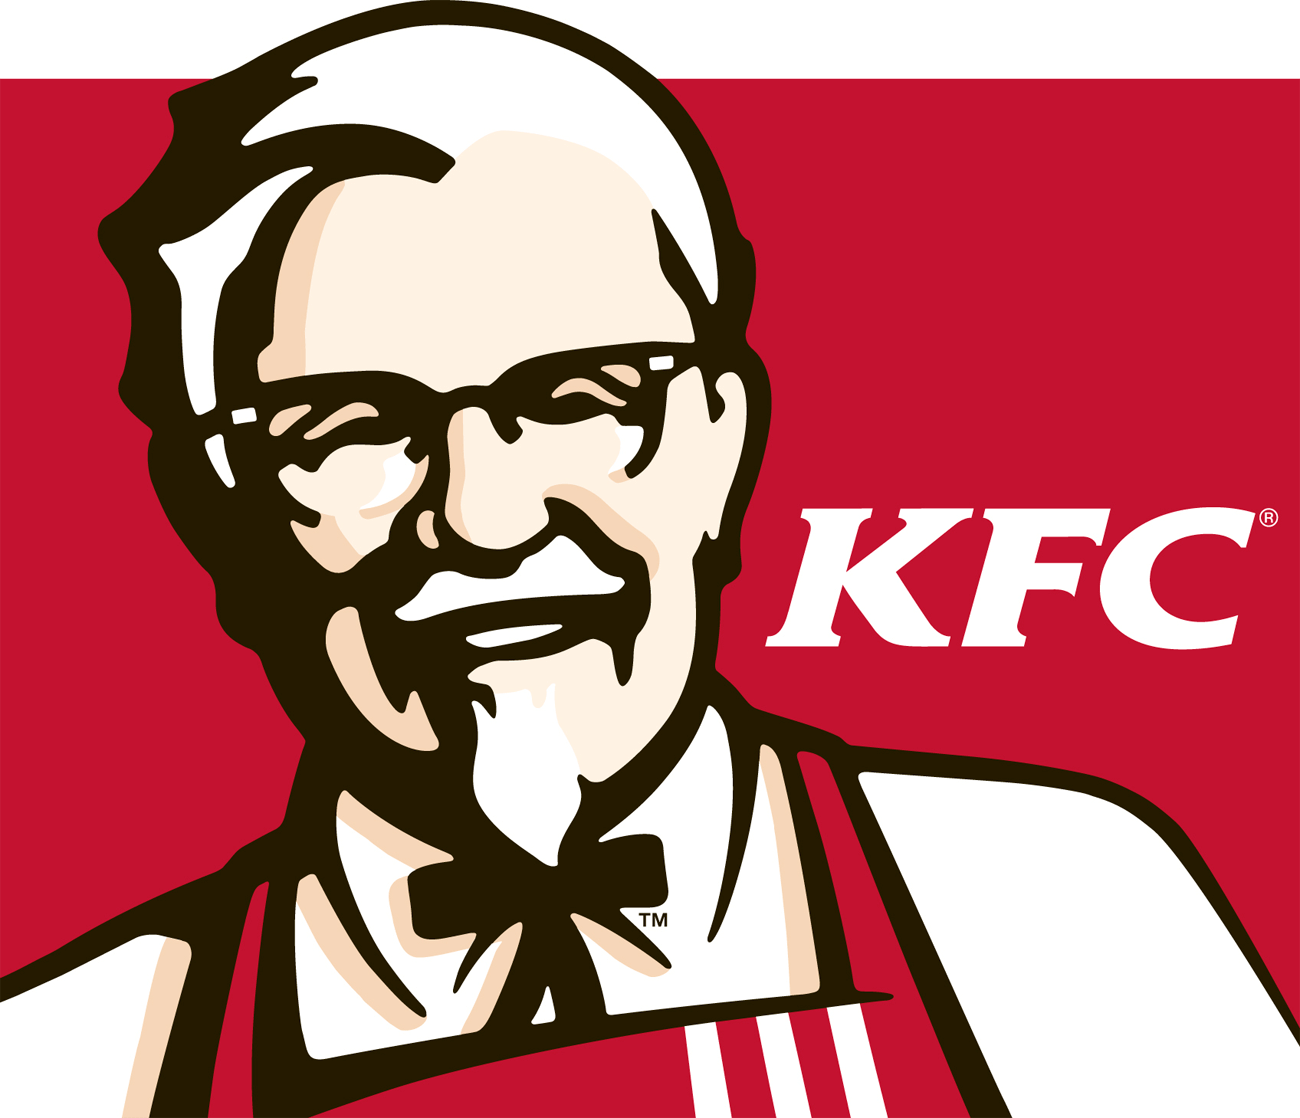 [KFC] Wednesday – R8.95 Snack Burger